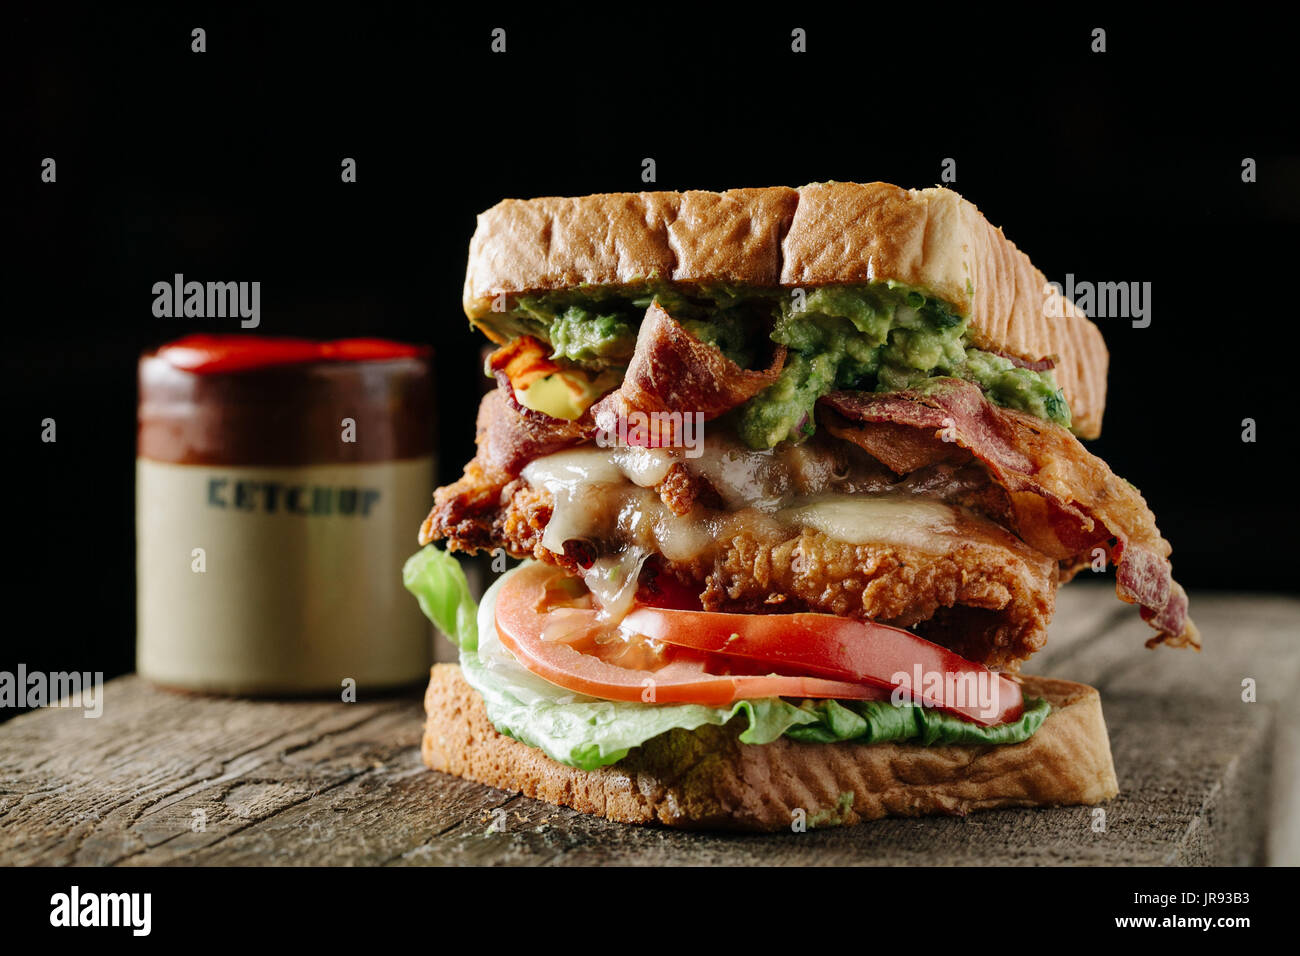 Southern style BLT sandwich on dark background Stock Photo